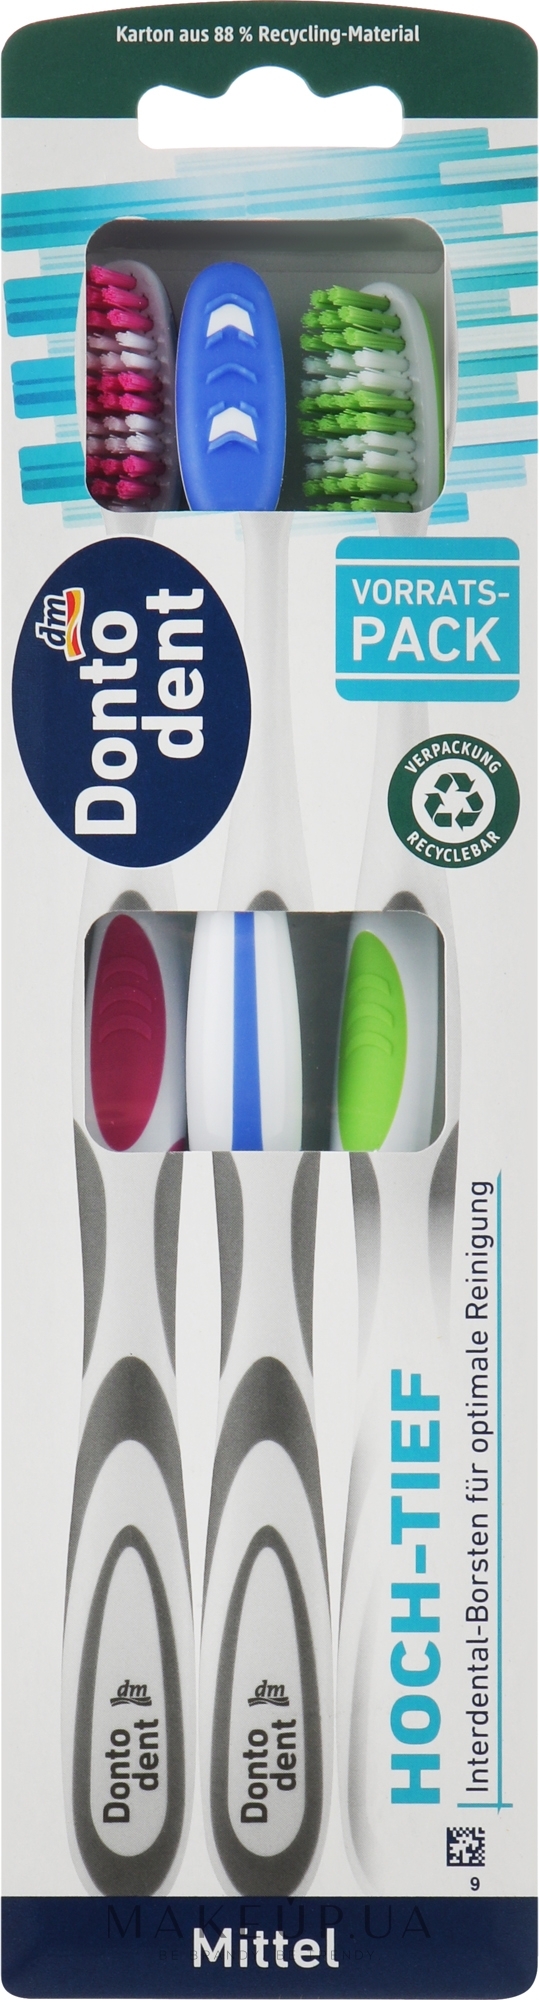 Набор зубных щеток Mittel, зеленая, синяя, розовая - Dontodent — фото 3шт